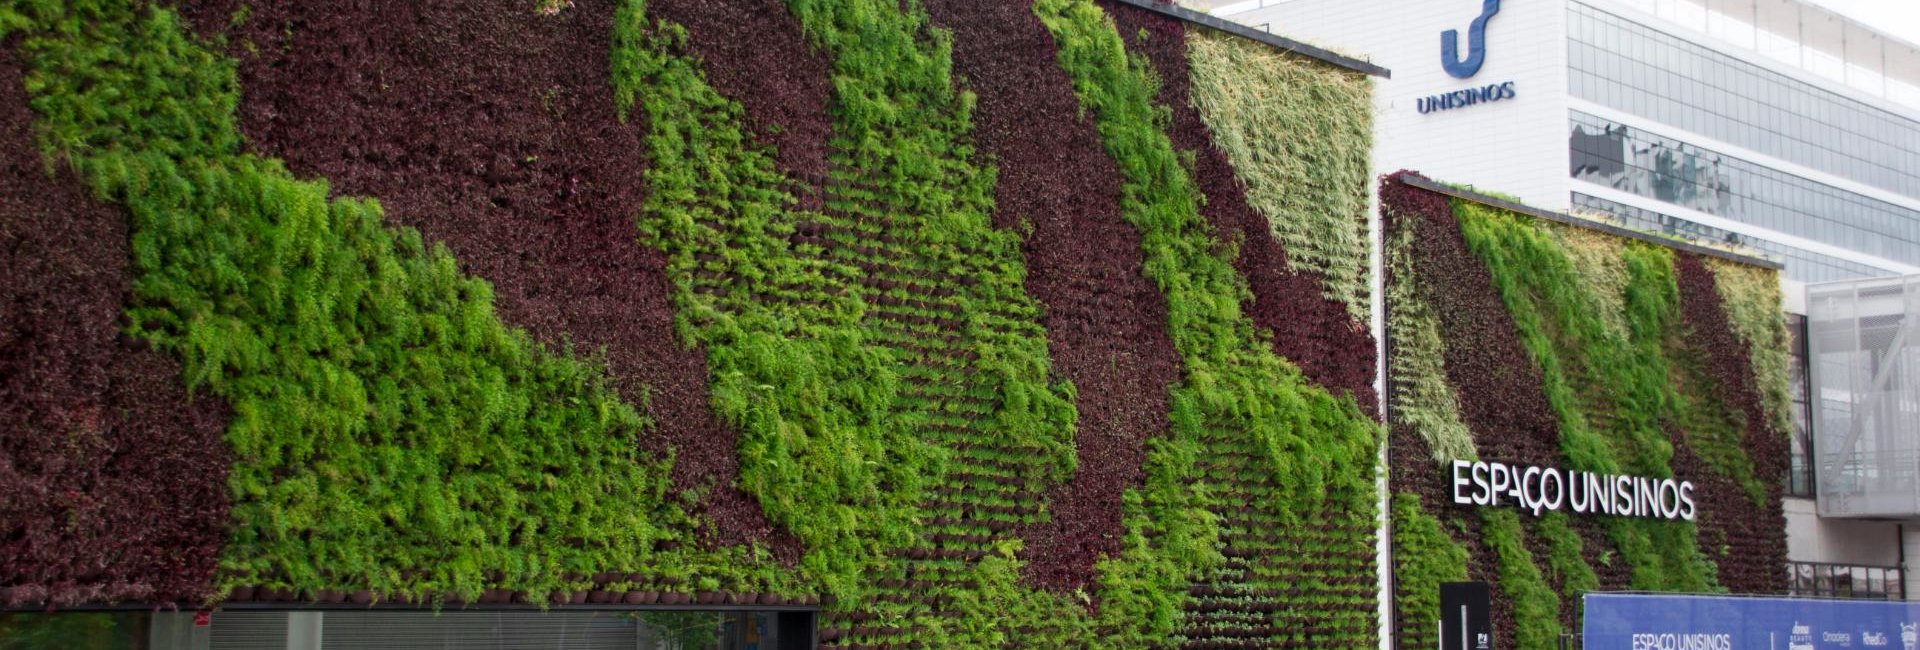 jardim vertical parede verde unisinos porto alegre